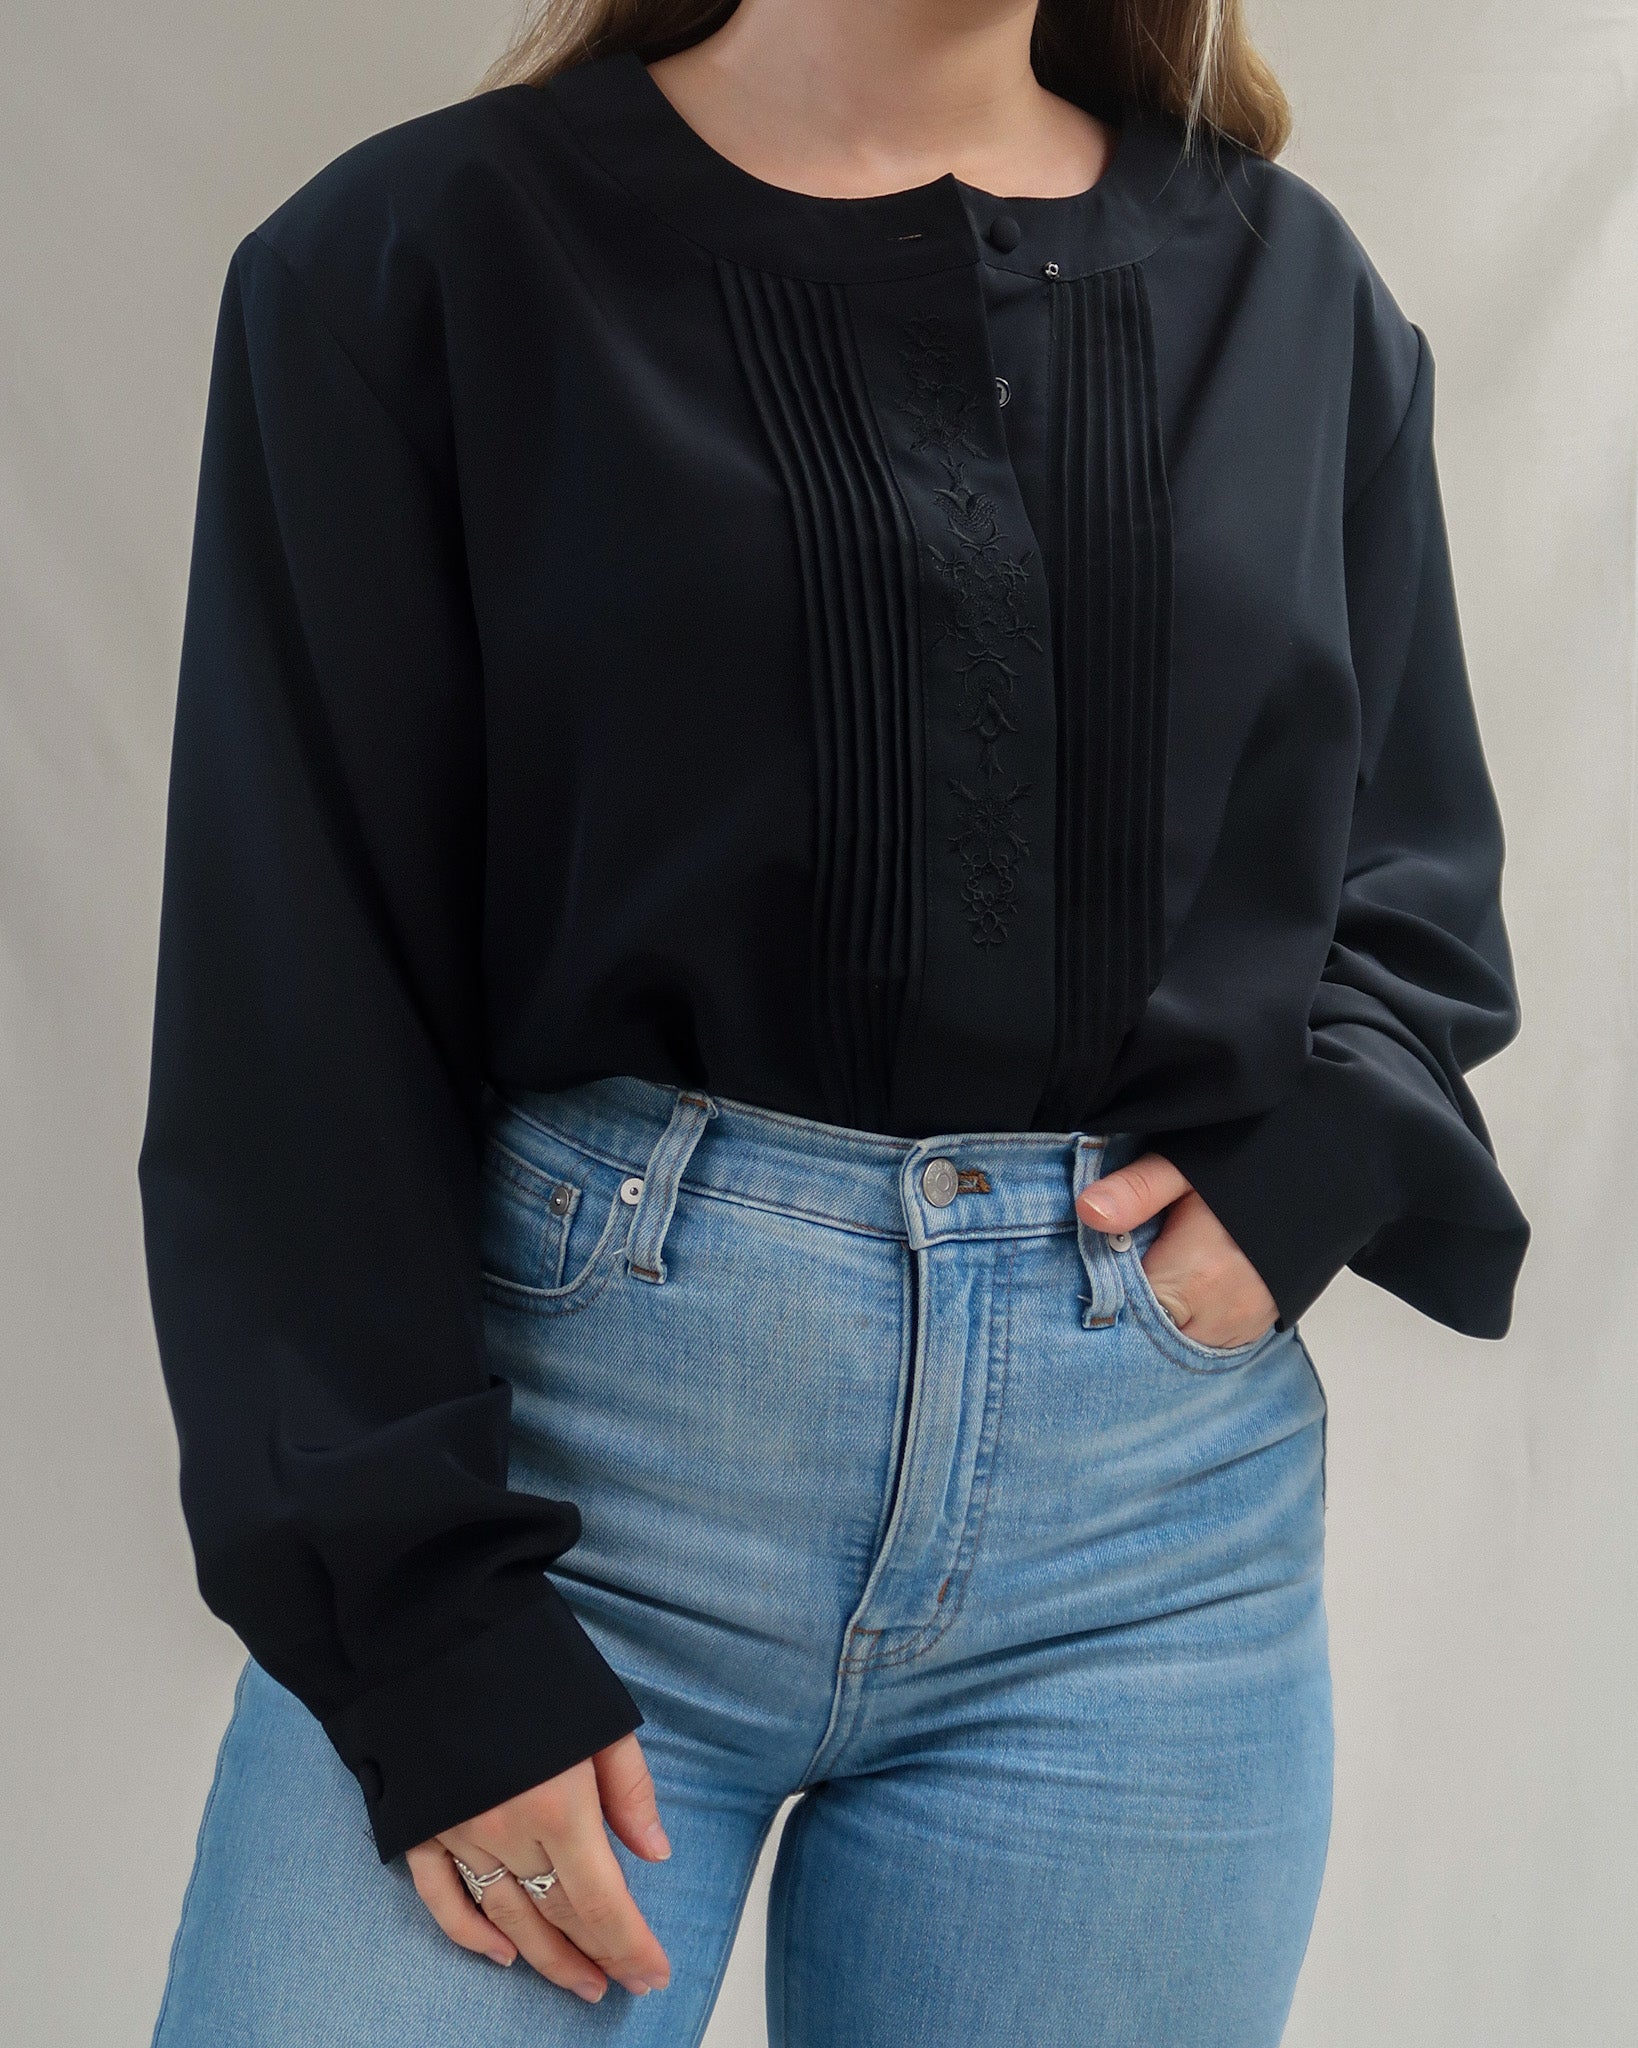 Black blouse